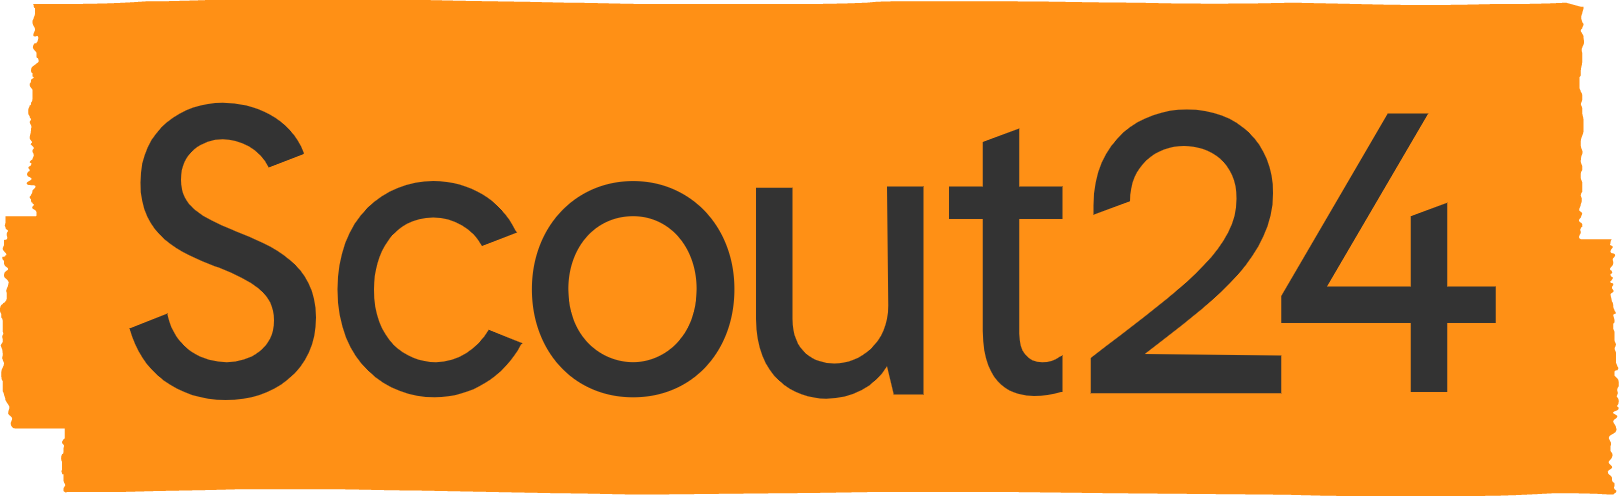 Scout24 logo (transparent PNG)